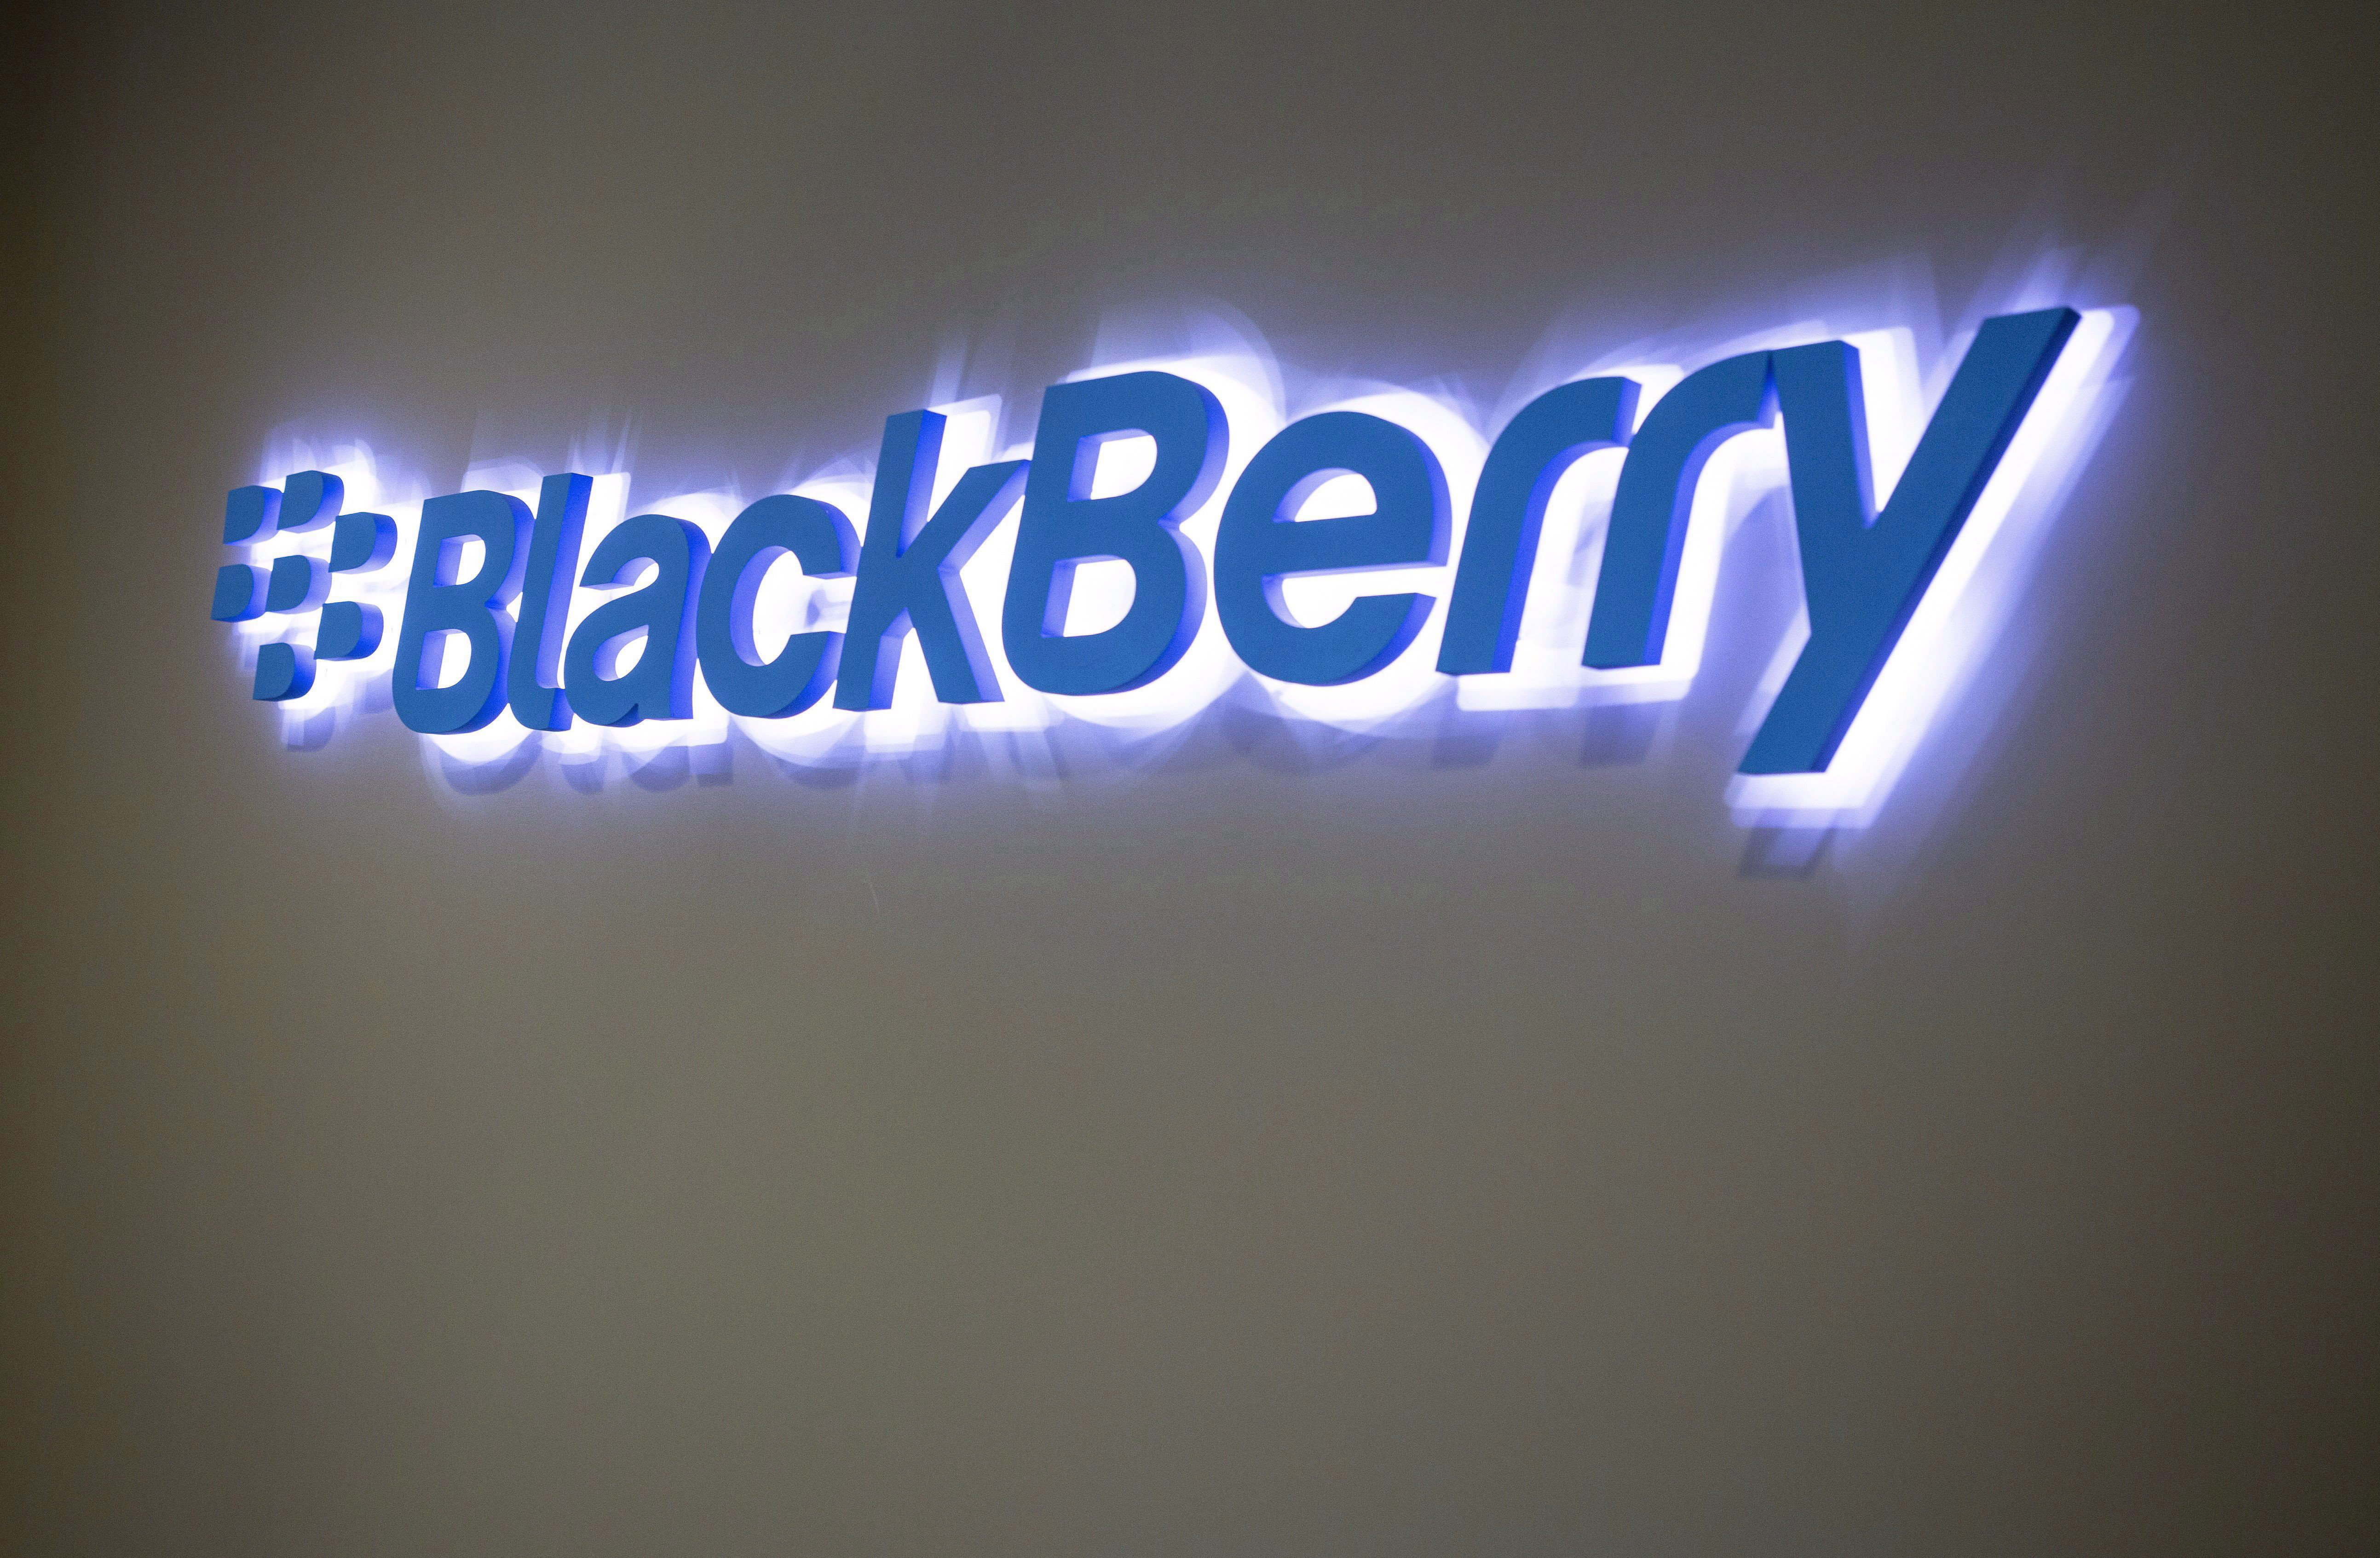 Blackberry sees revenue up, but 3rd quarter loss as business split up